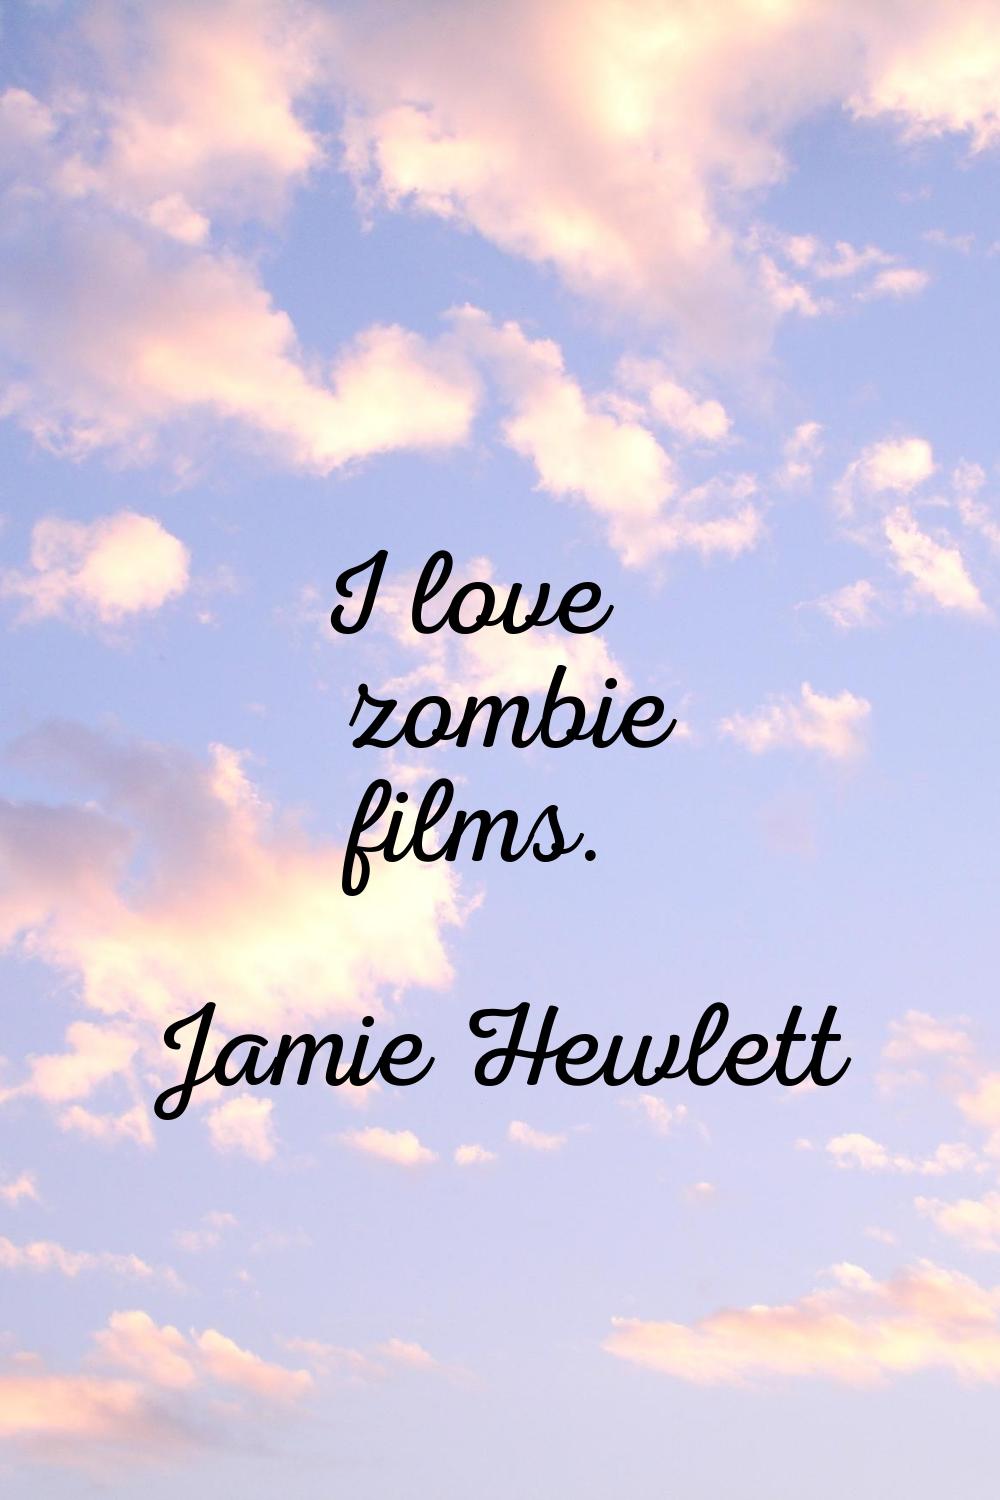 I love zombie films.